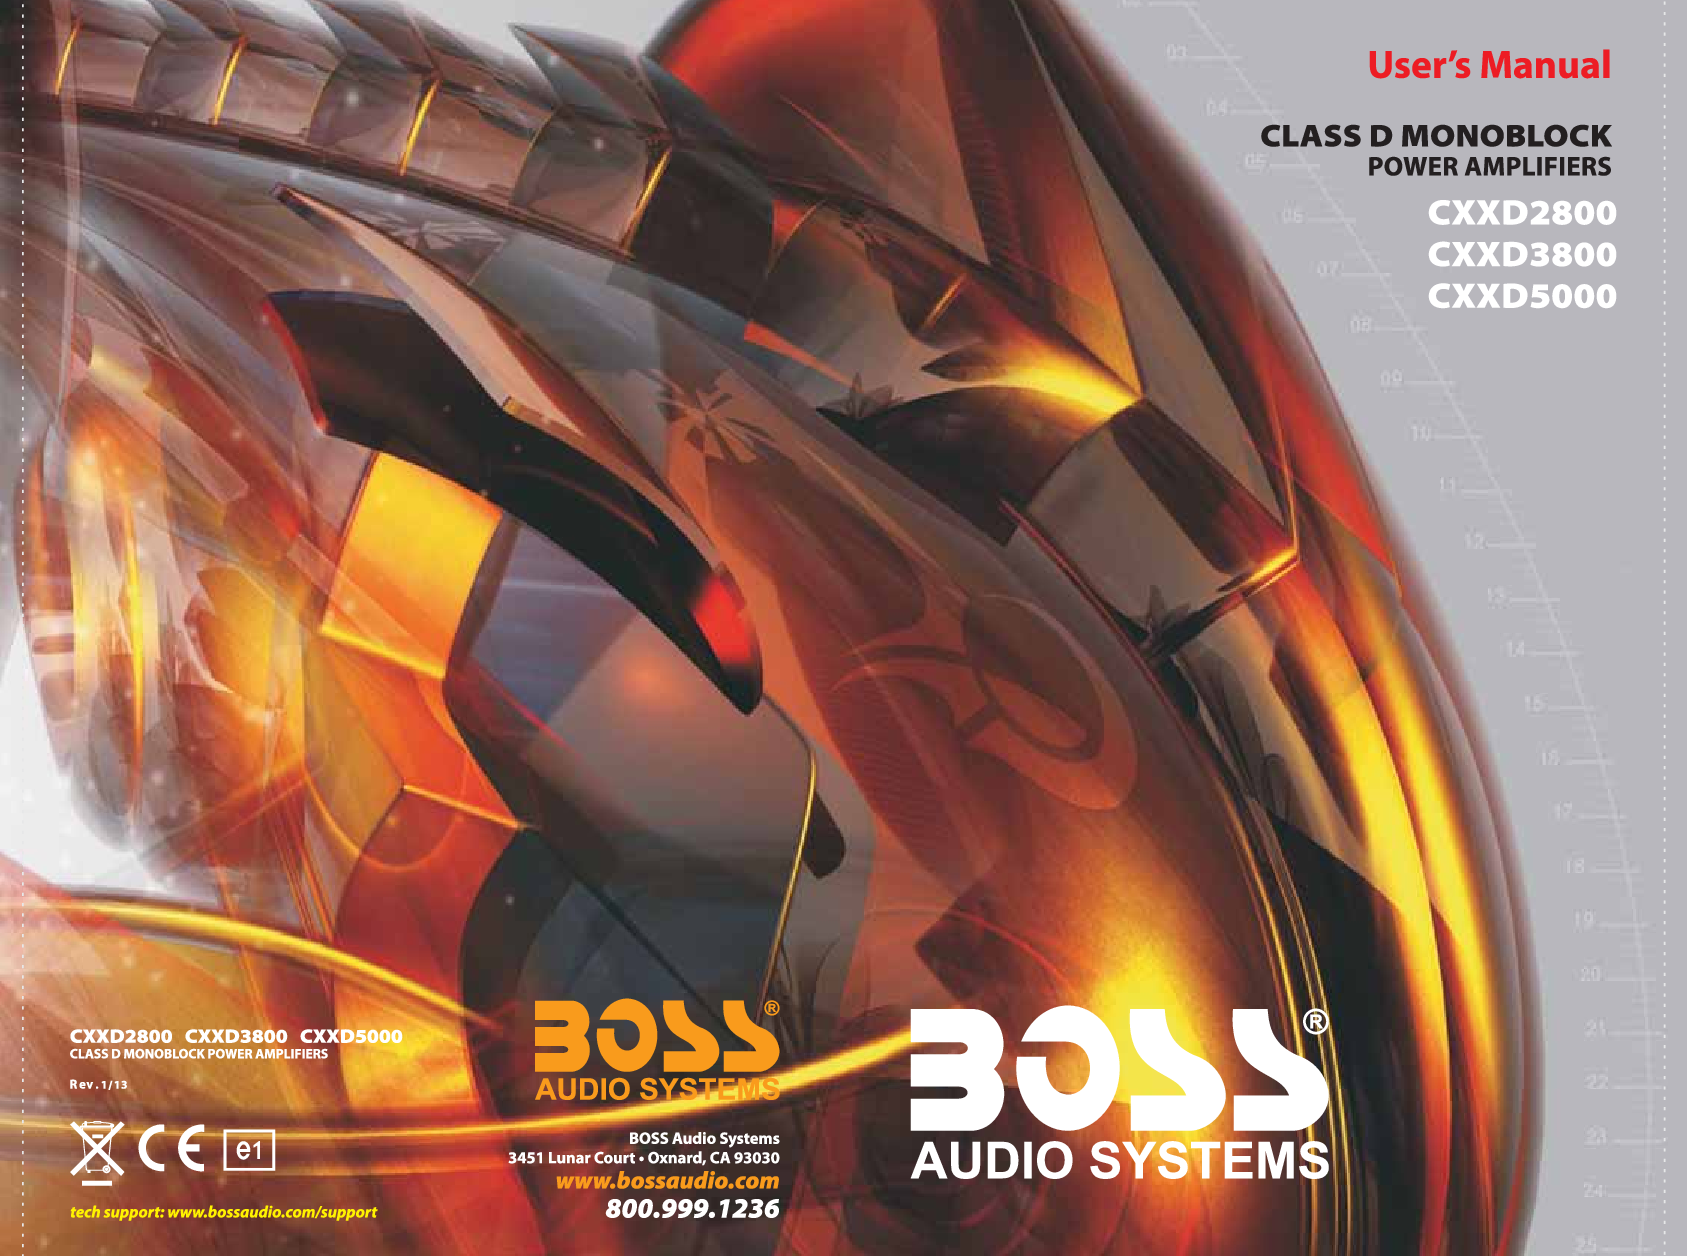 Boss Audio CHAOS EXXTREME II CXXD2800, CHAOS EXXTREME II CXXD3800, CHAOS EXXTREME II CXXD5000 User Manual